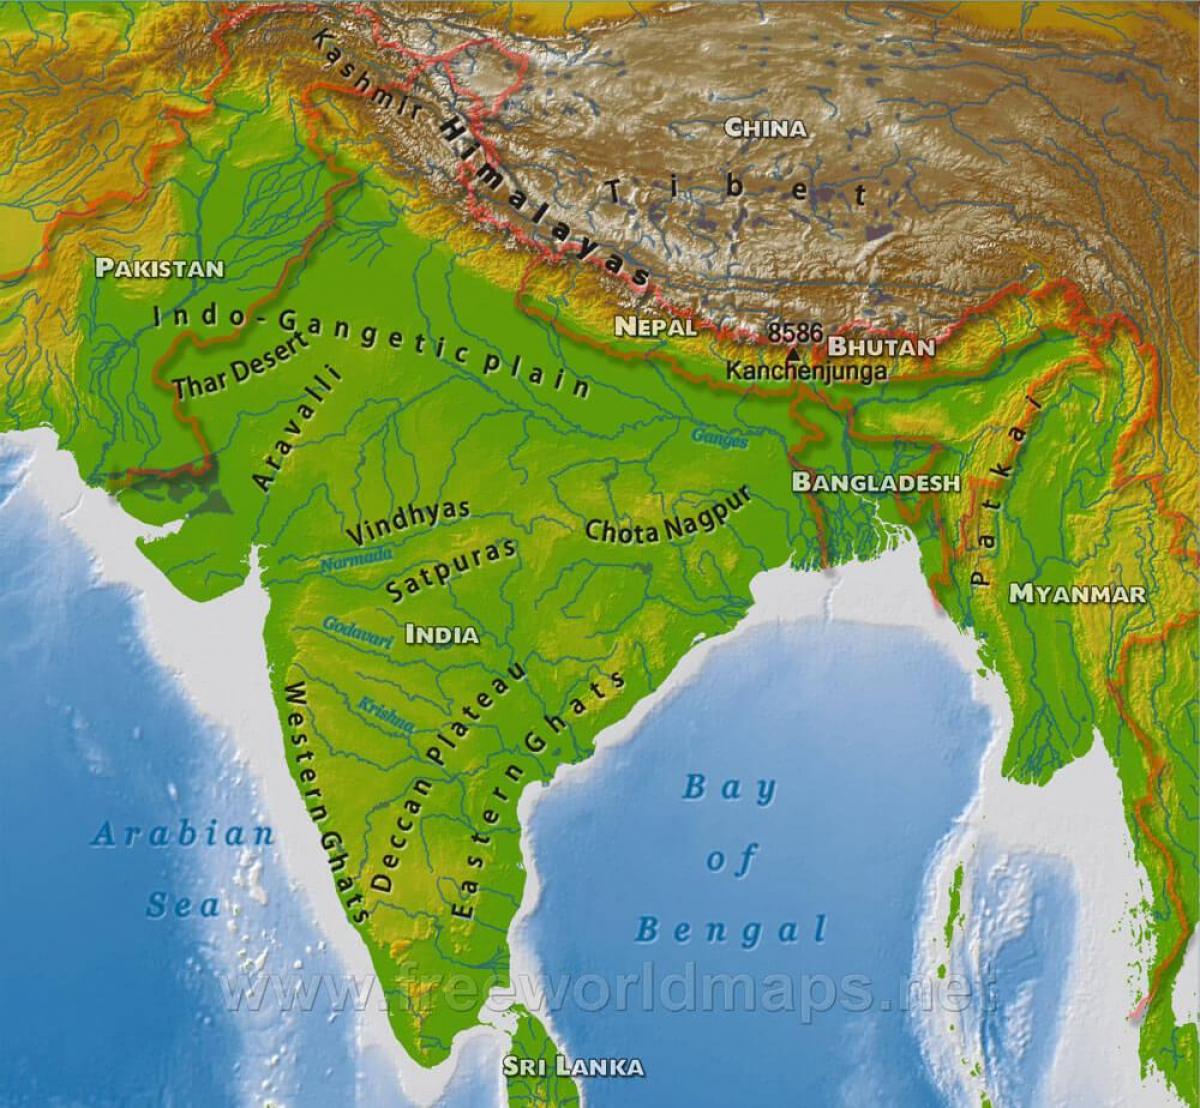 harta fizica india India harta fizică hd   harta Fizică din India hd (Asia de Sud   Asia)